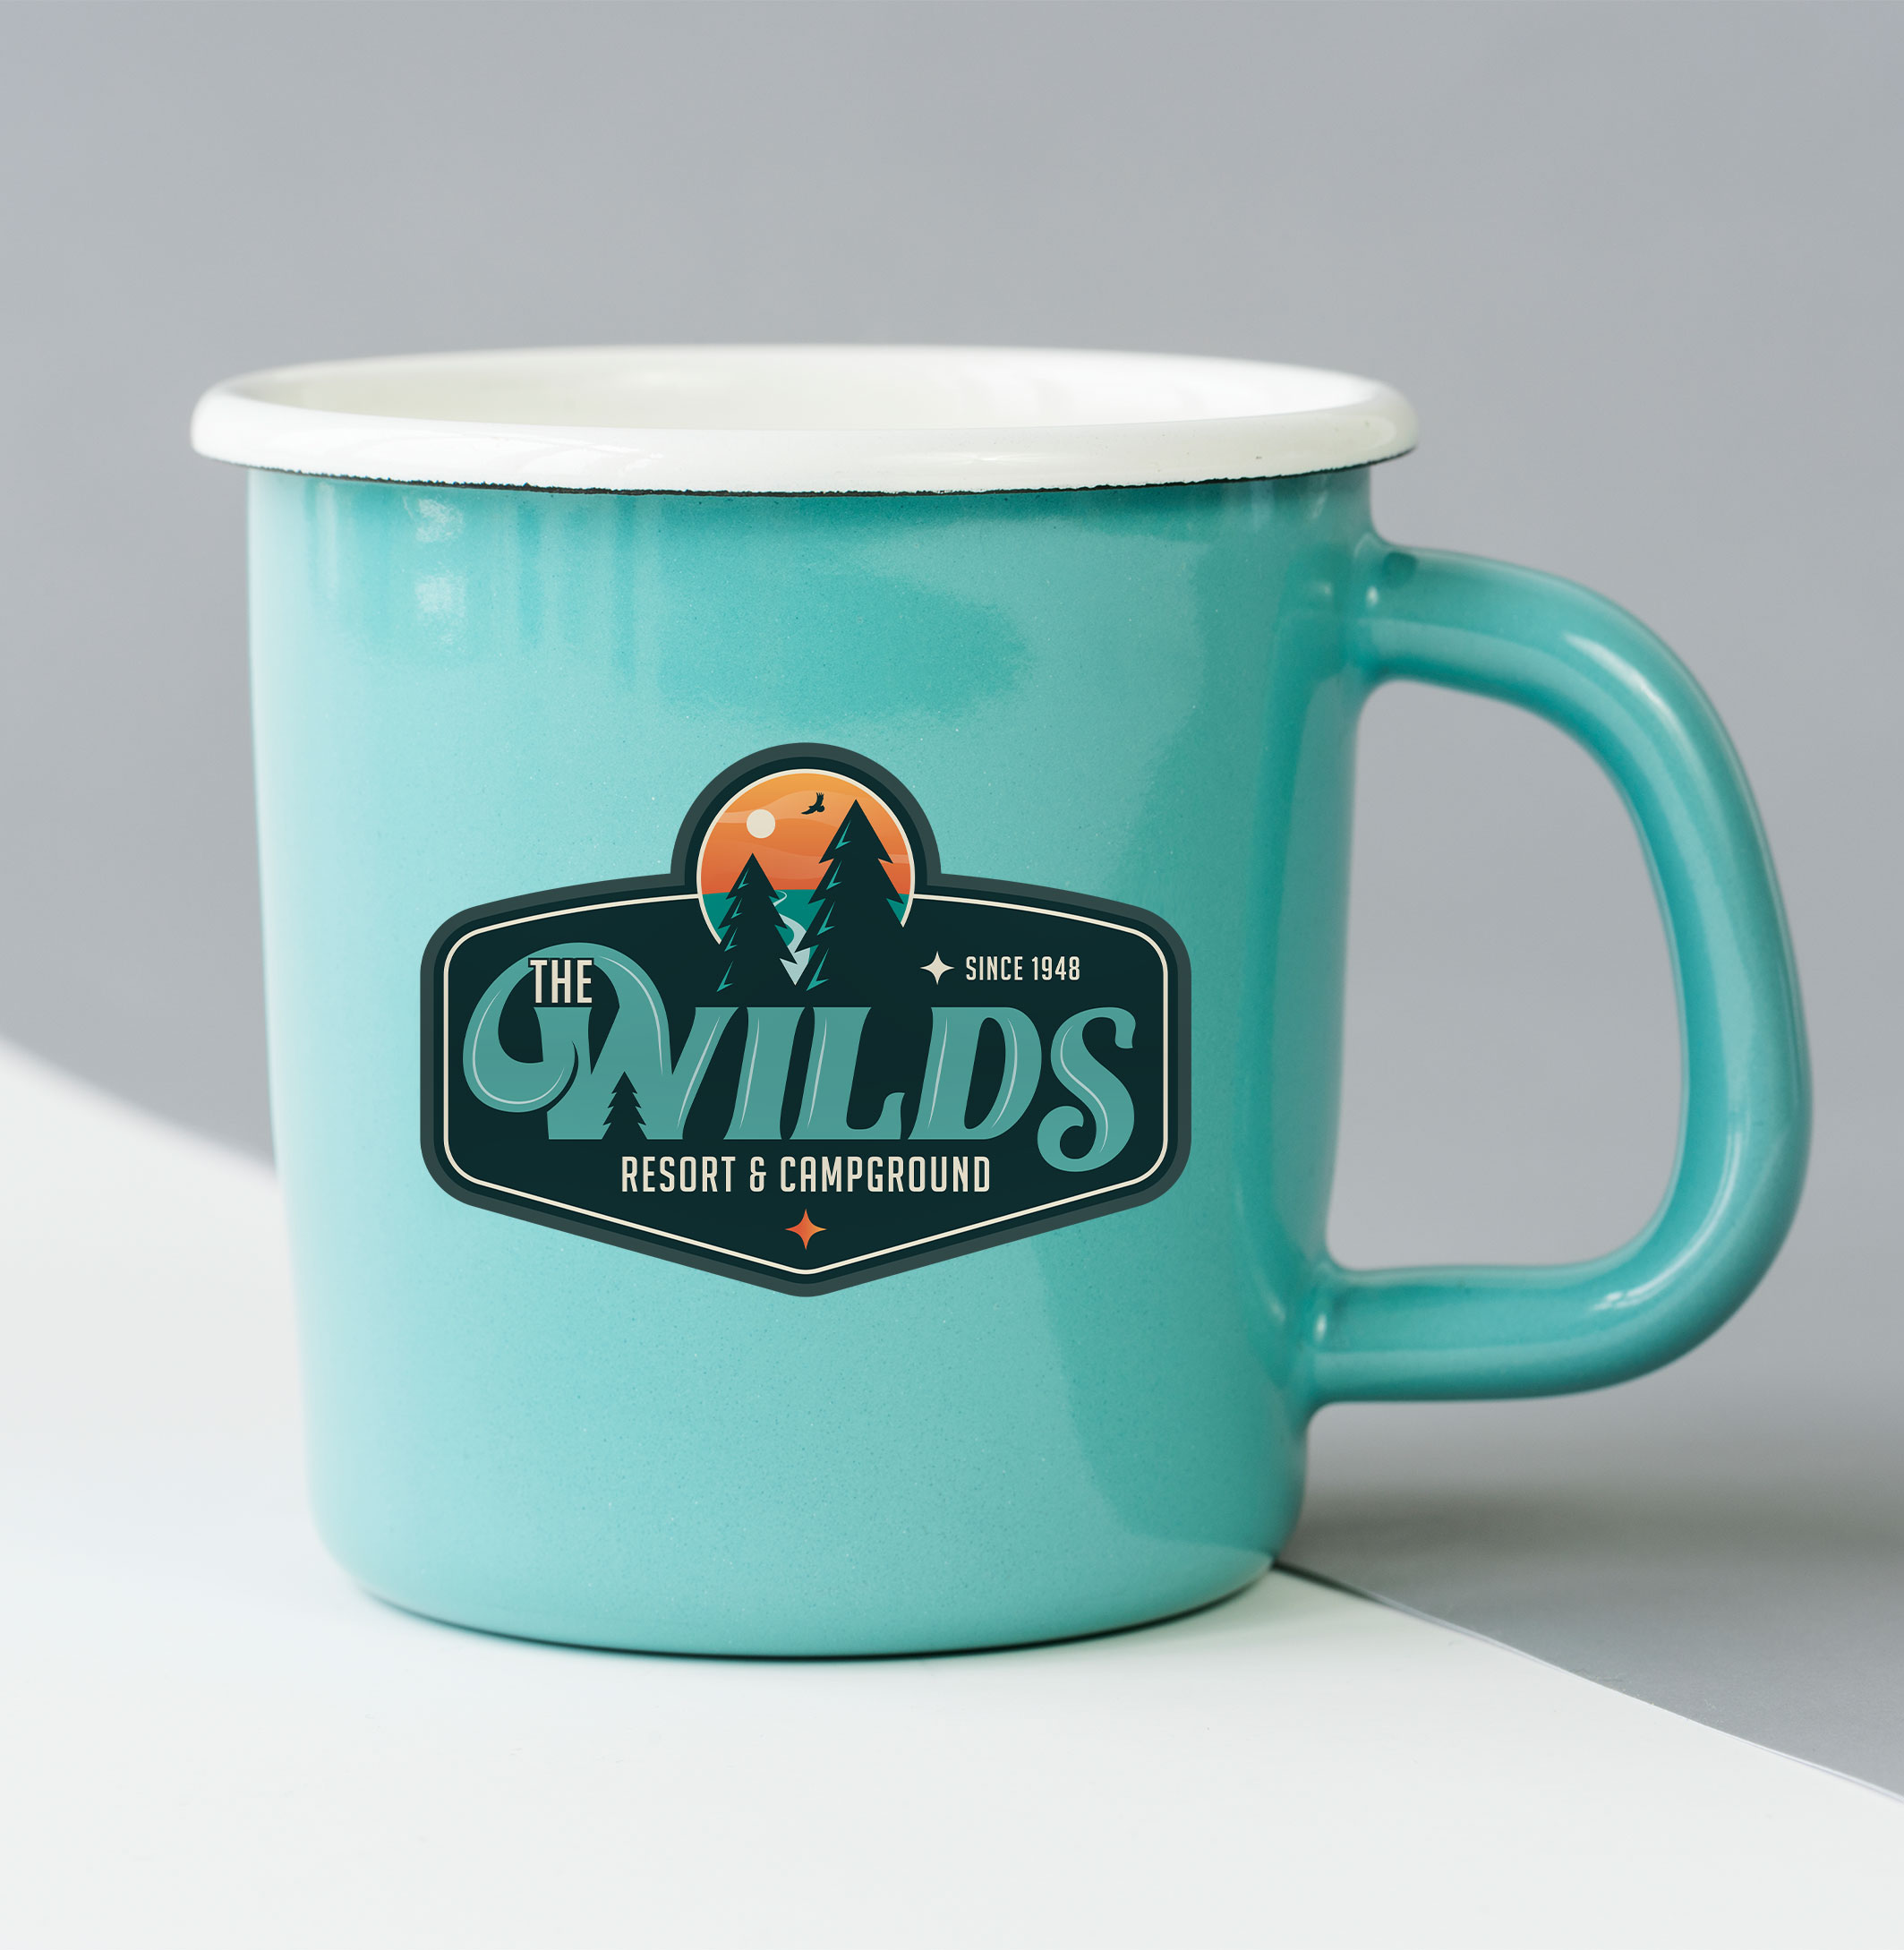 wilds resort logo and barnding